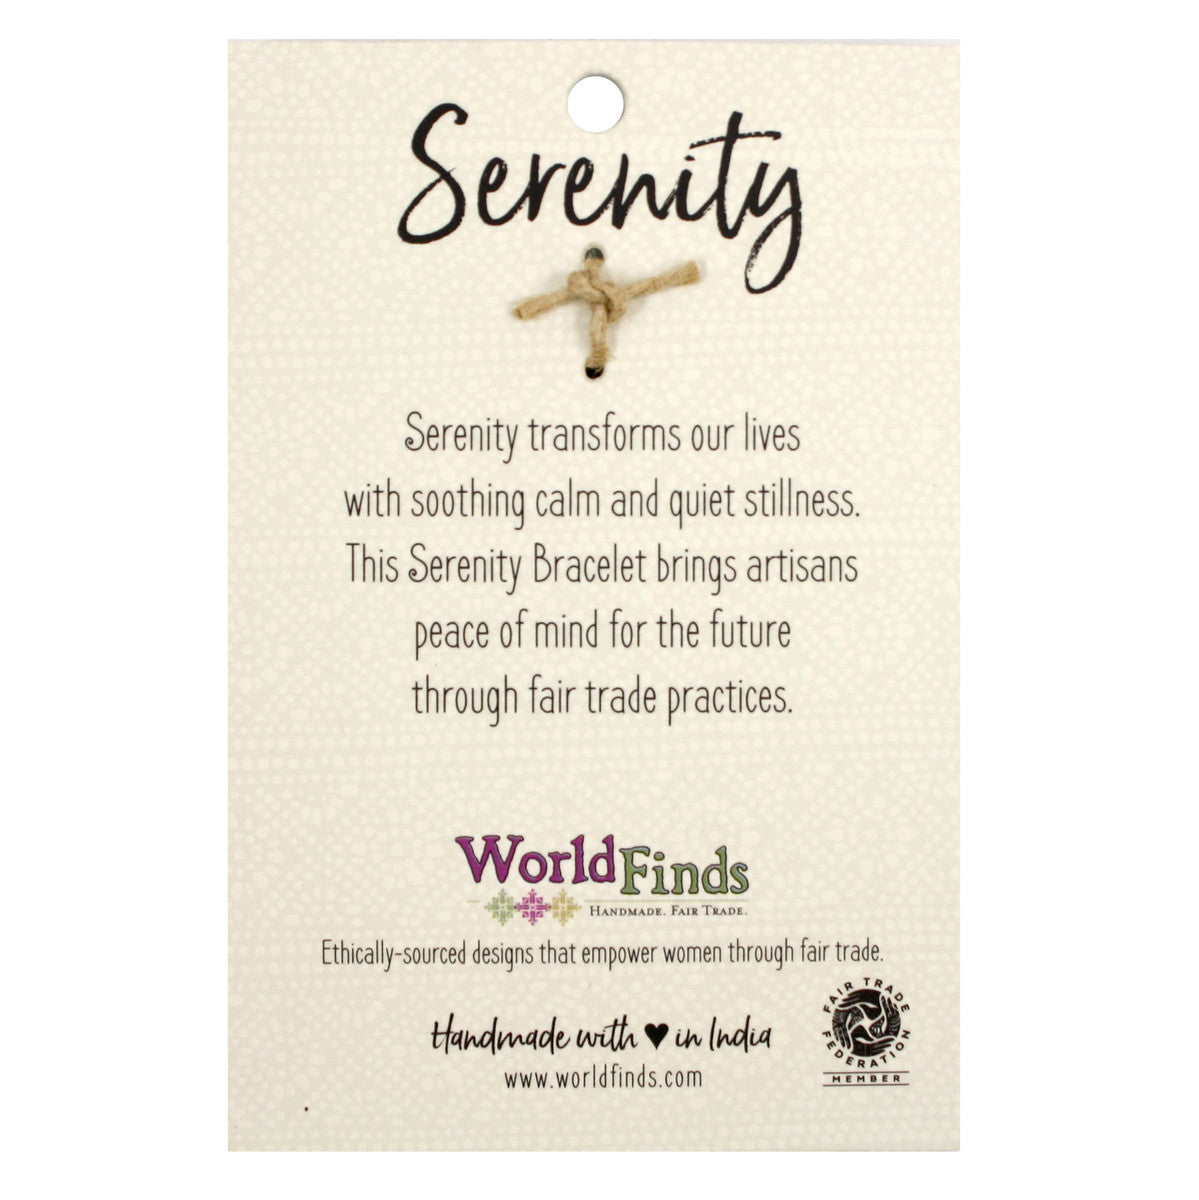 card describing serenity meaning of bracelet